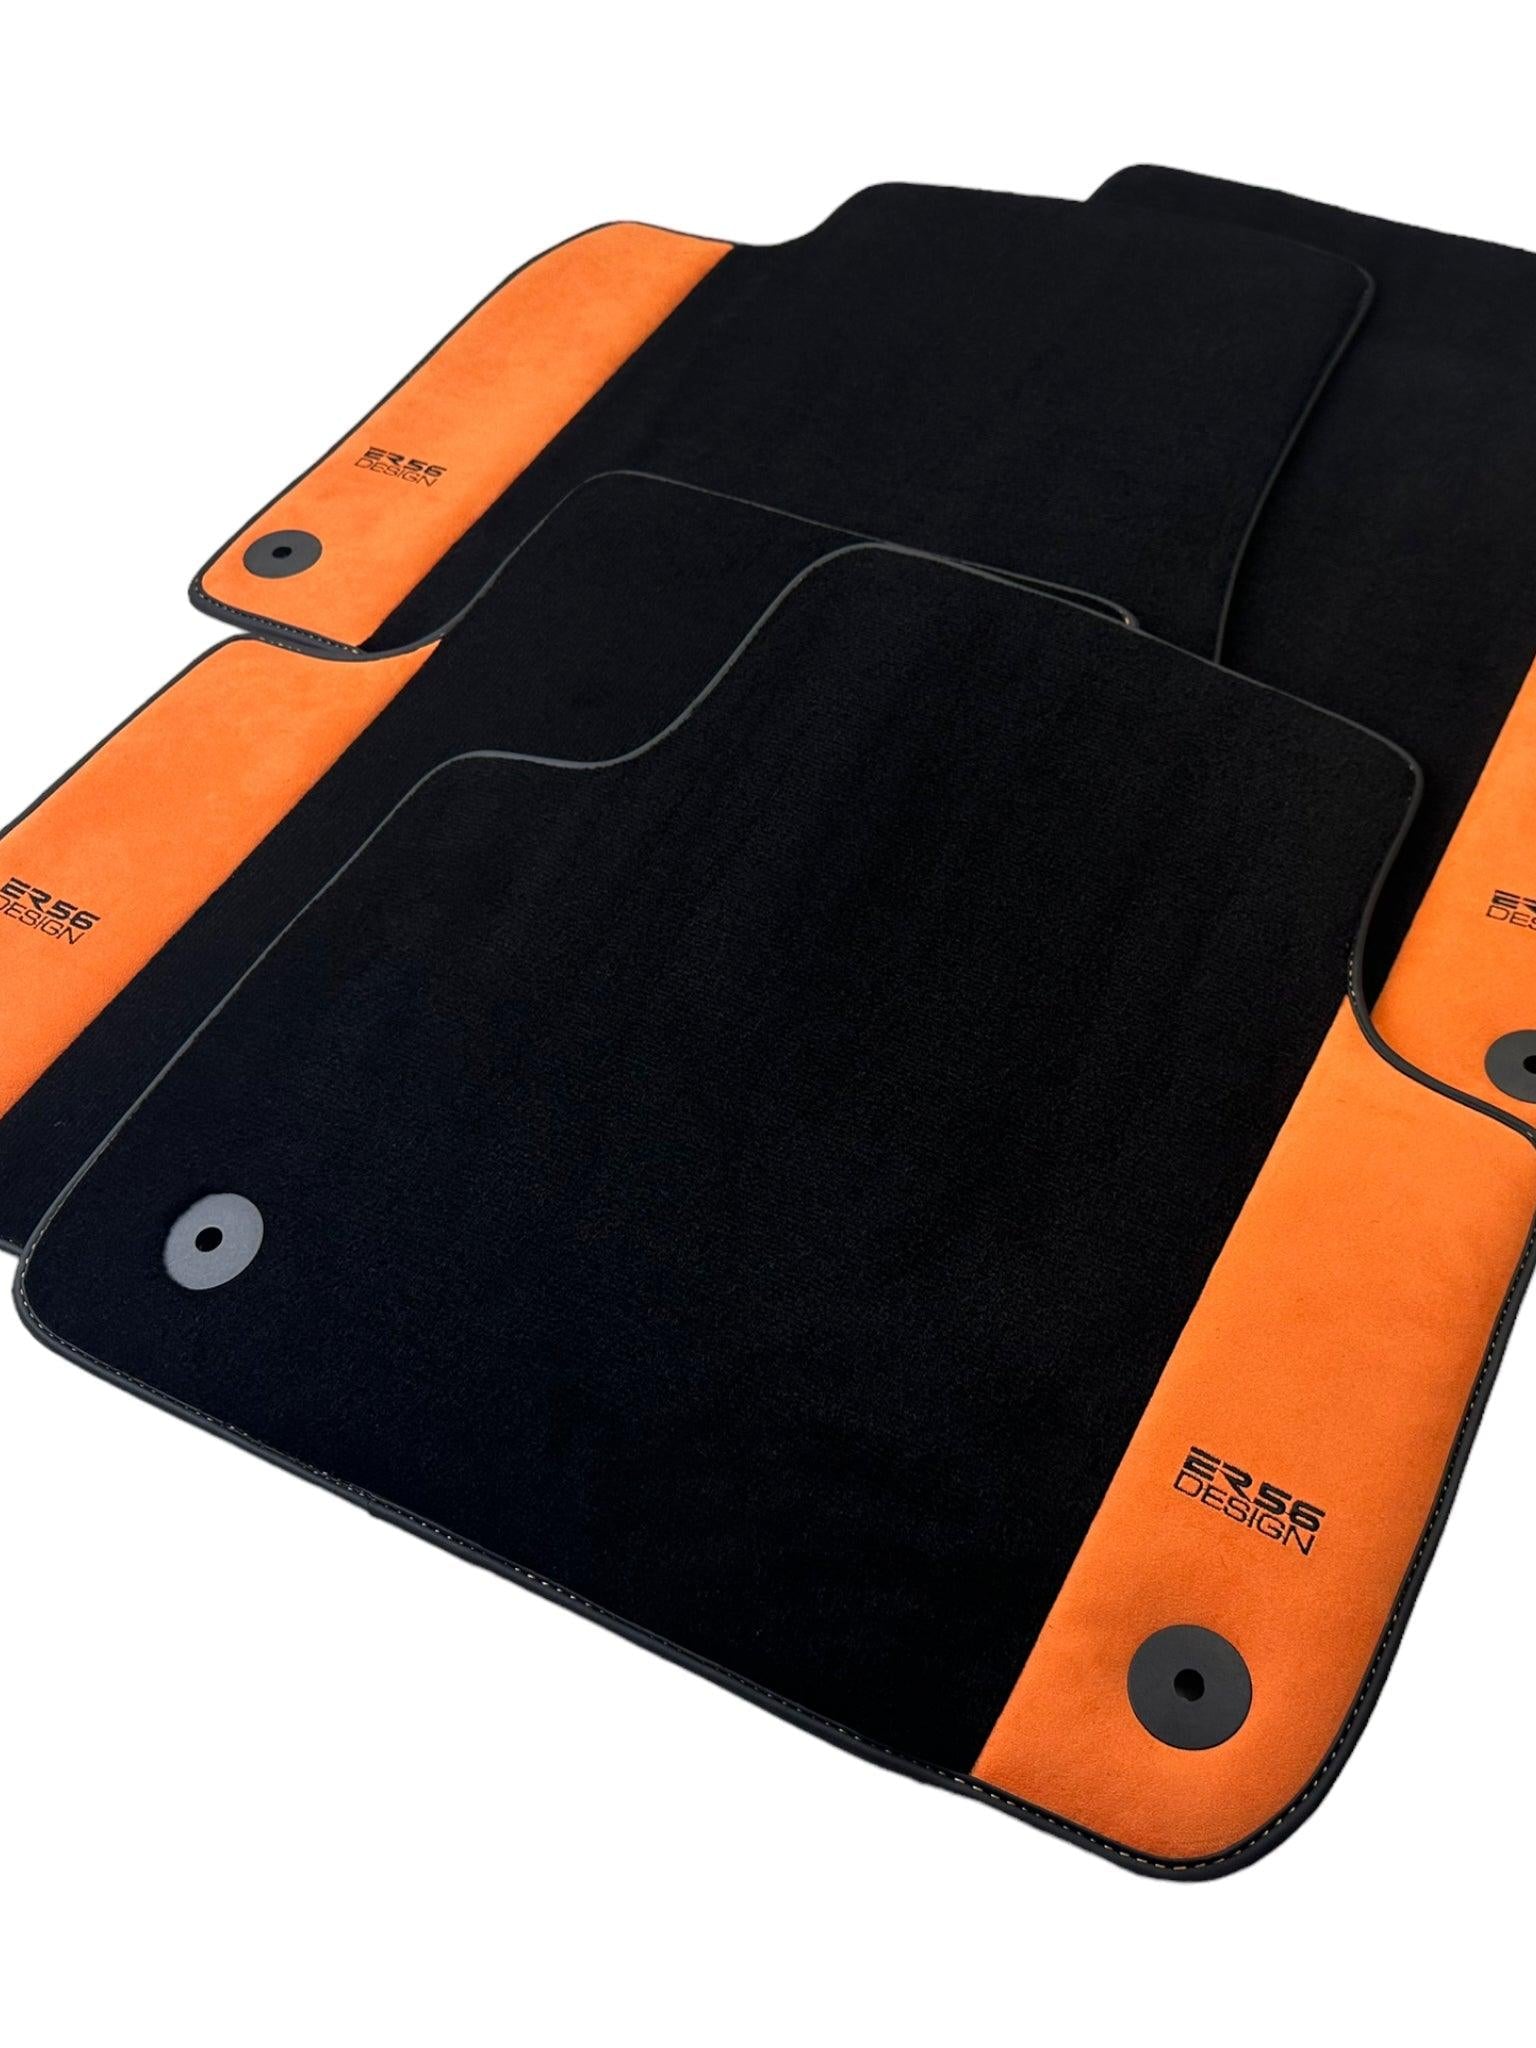 Black Floor Mats for Audi Q5 FYT Sportback (2021-2024) Orange Alcantara | ER56 Design